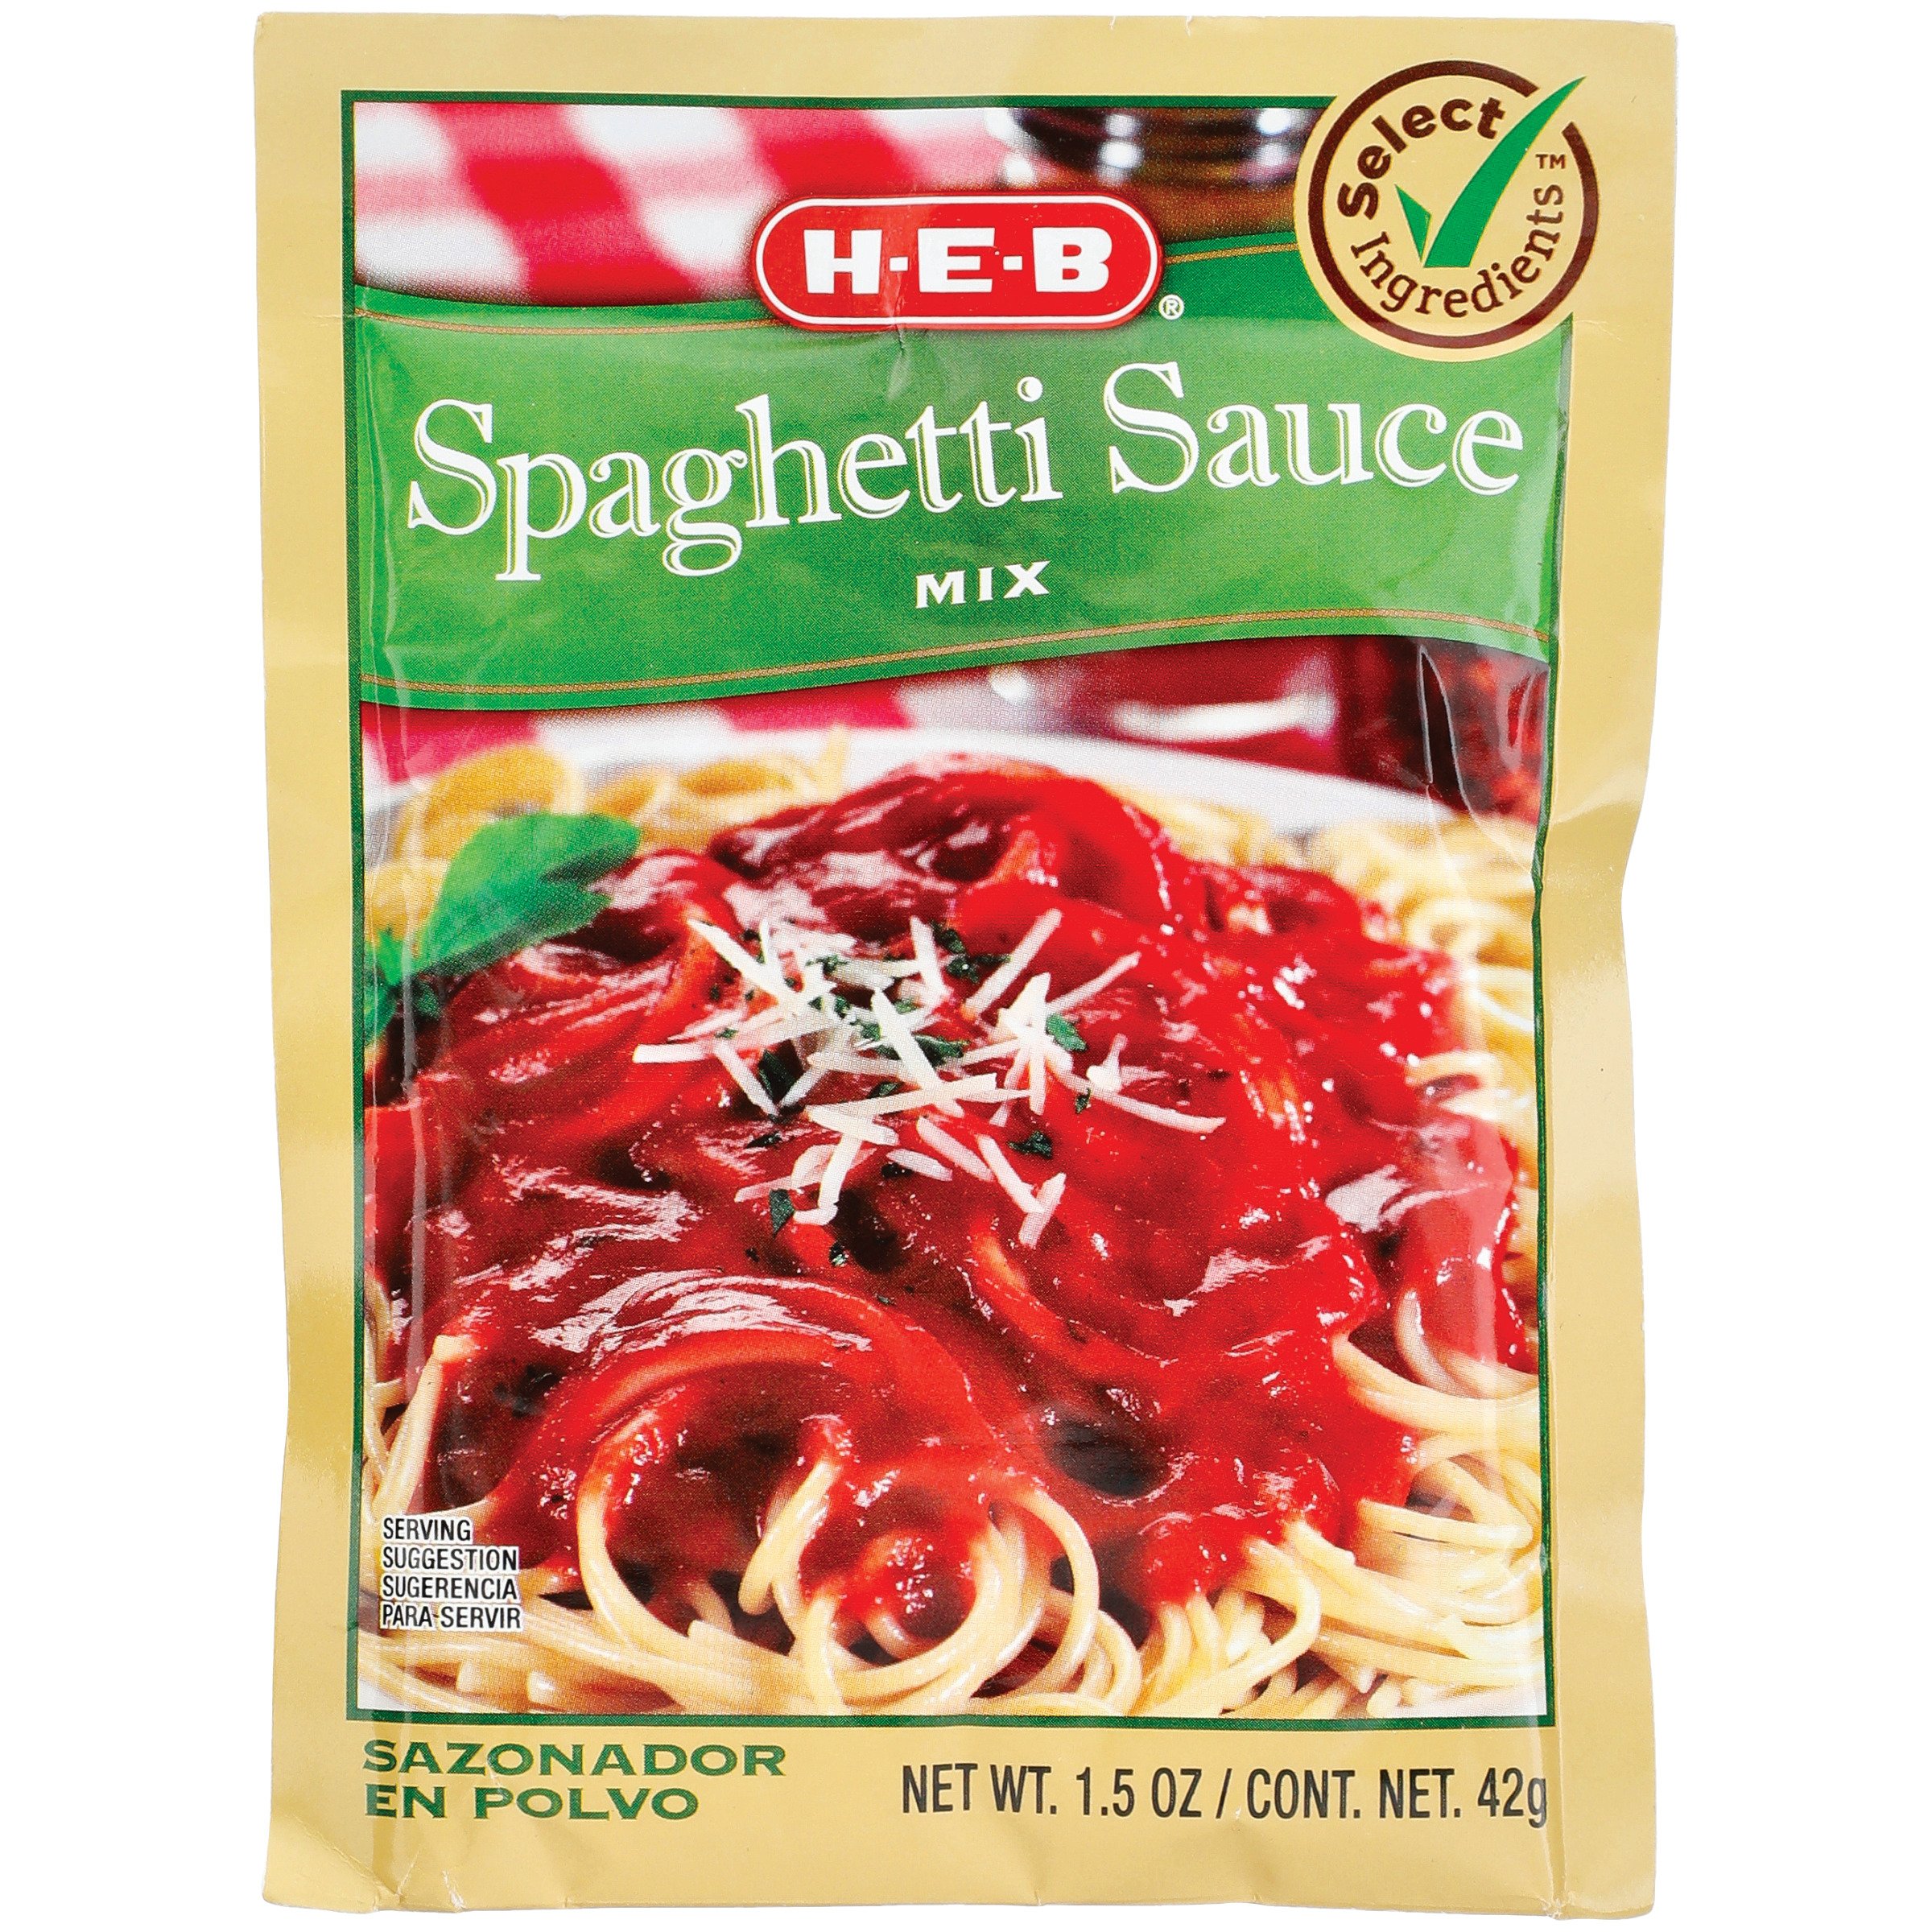 H-E-B Spaghetti Sauce Mix - Shop Spice Mixes at H-E-B